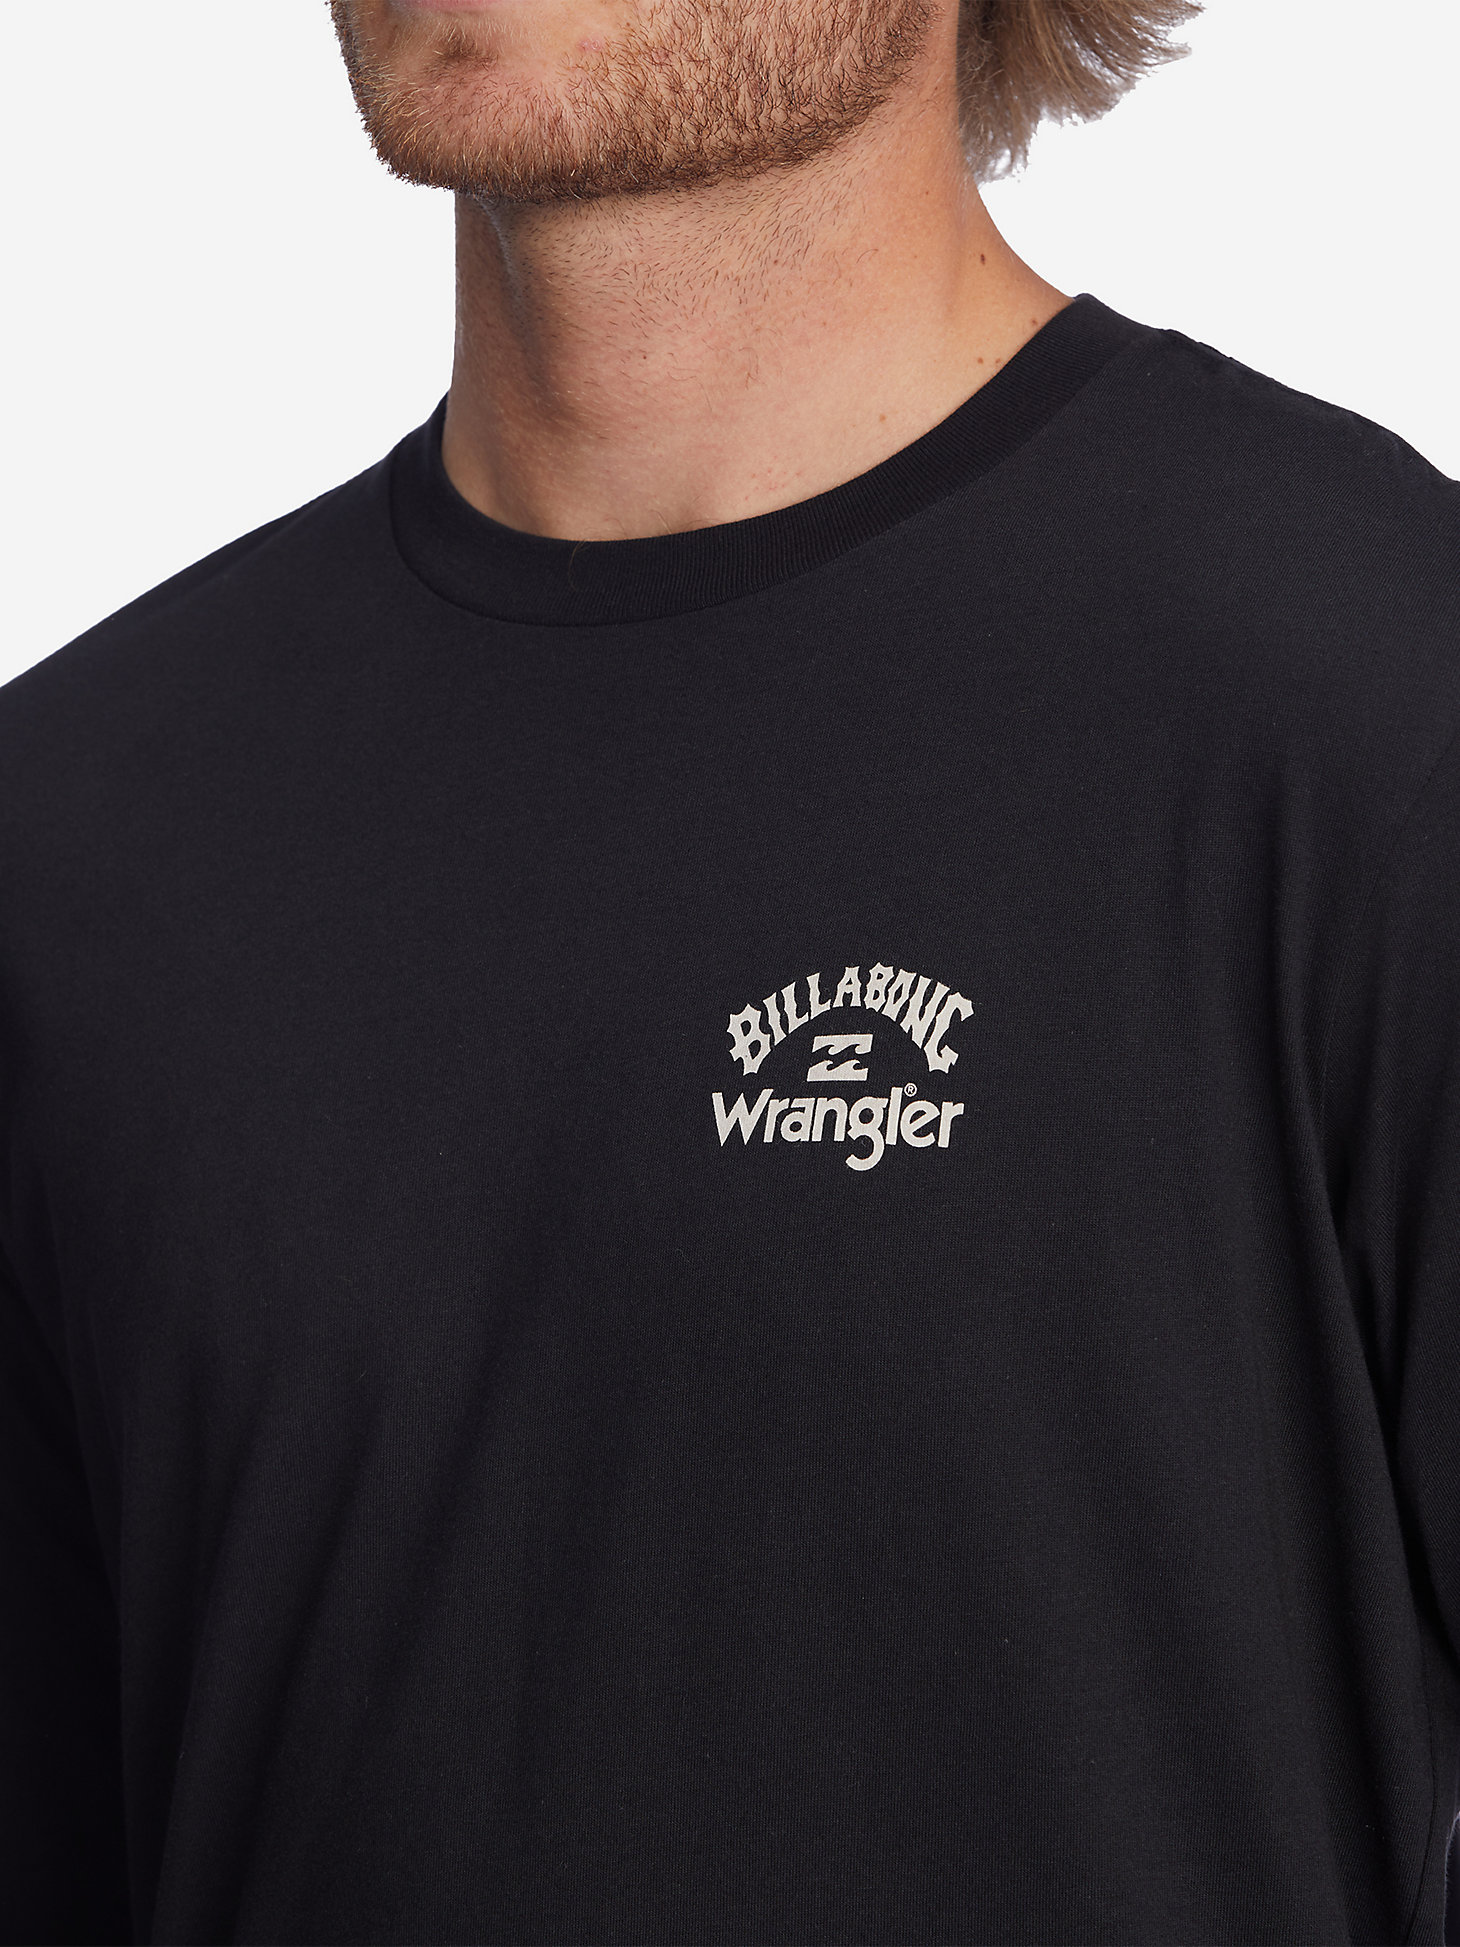 Billabong x Wrangler® Men's Rancher Shirt in Black alternative view 2